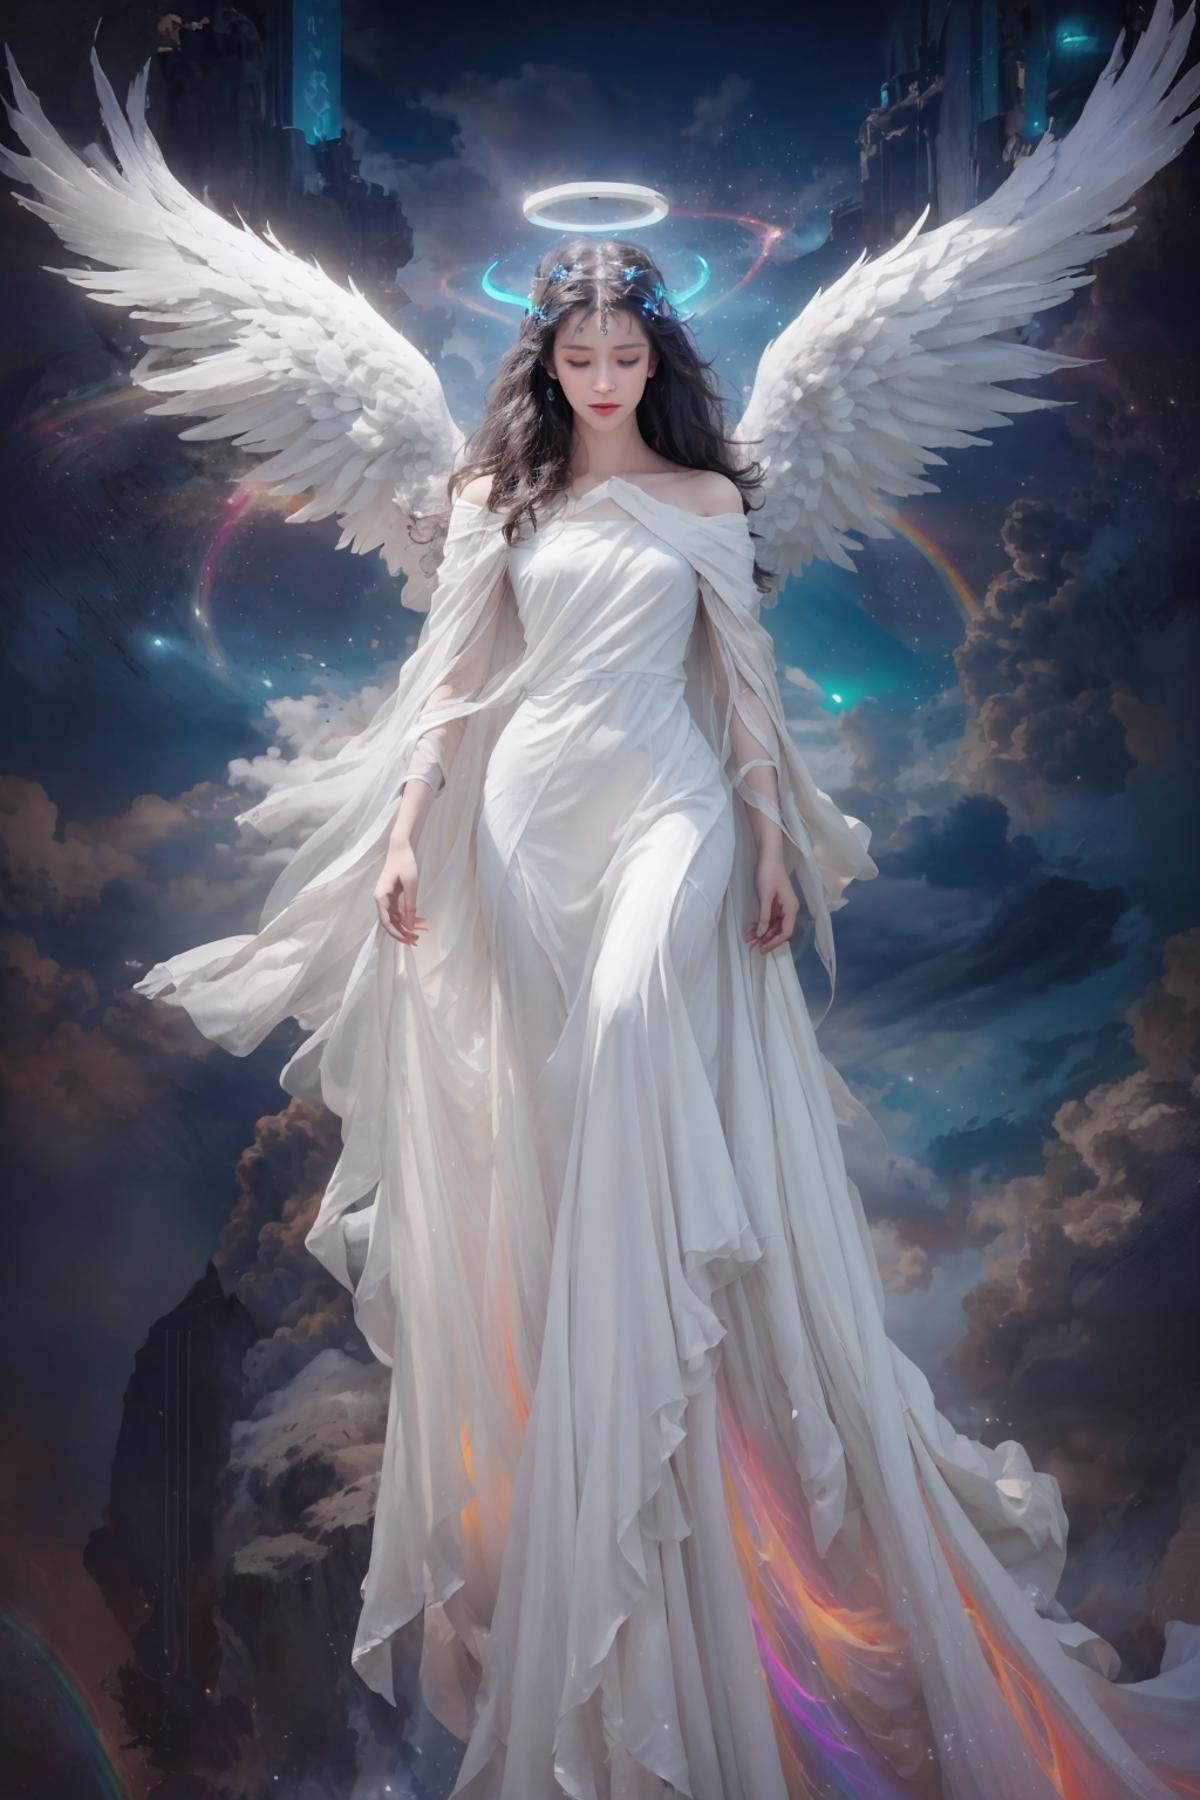 绪儿-绝美彩虹天使 beautiful rainbow angel image by jurgengolf